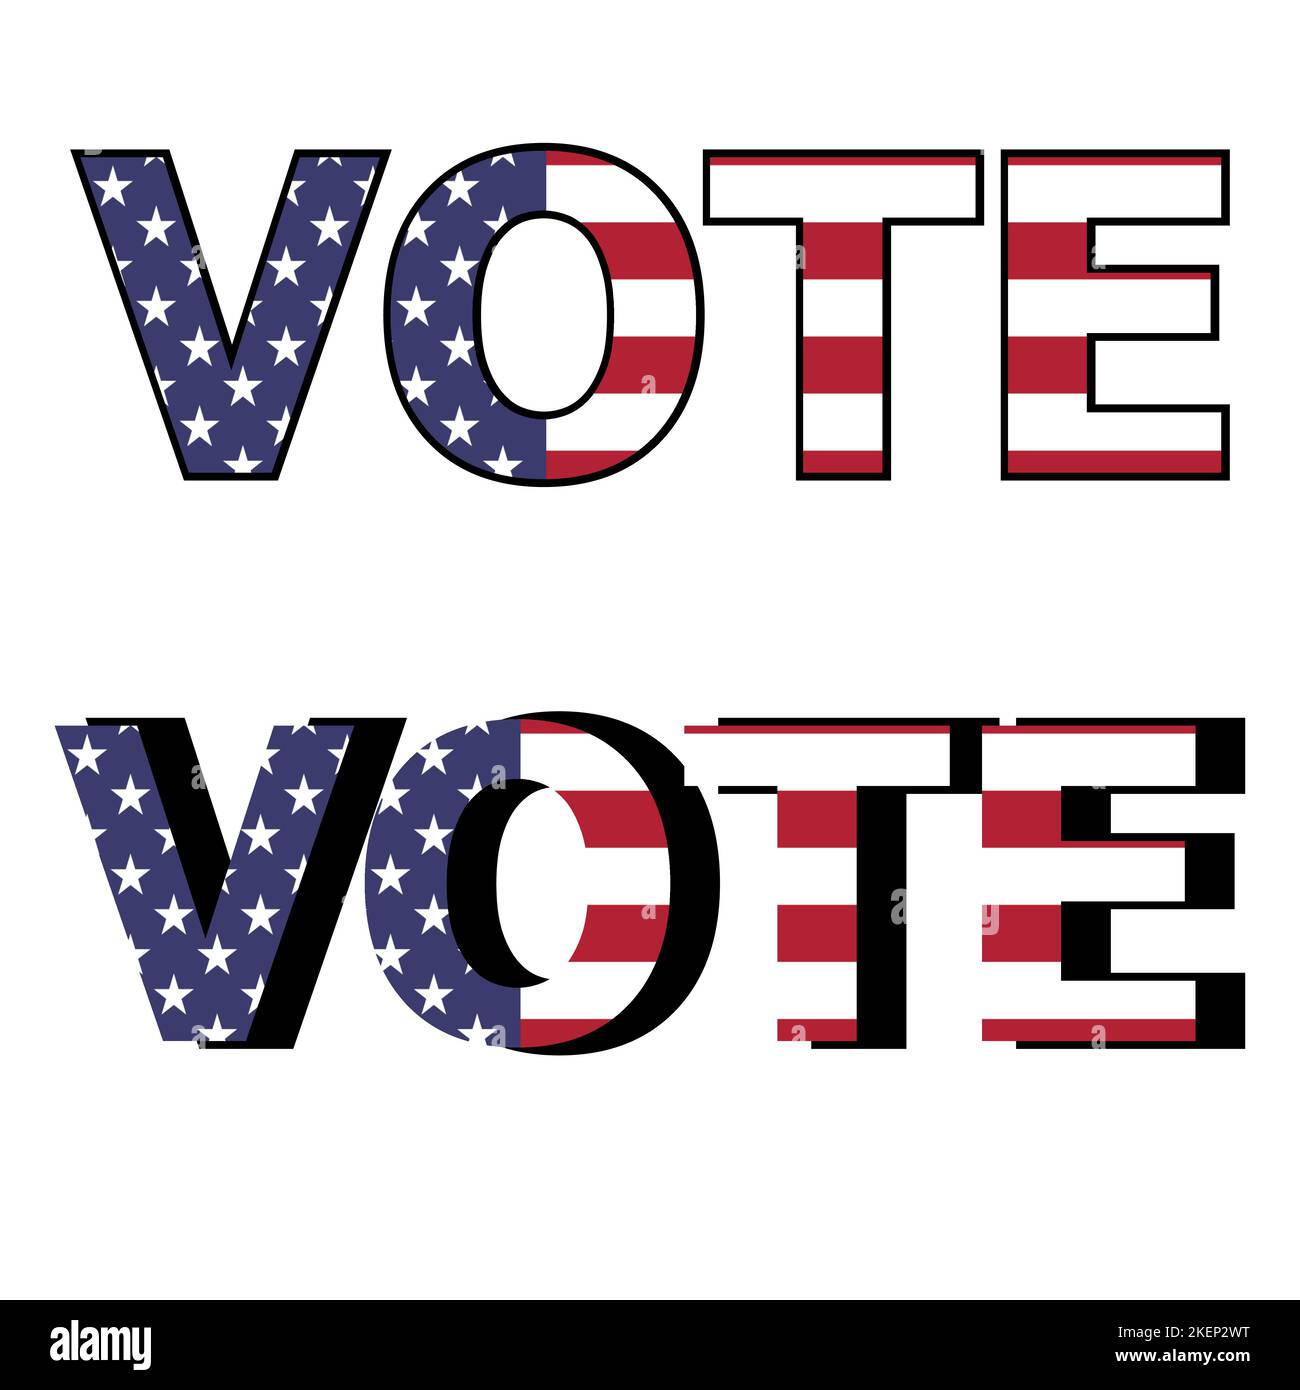 Vote vector illustration. US Election. Midterm Election. Banner Design. Flyer Design. Poster Design. National Event. Vector. Illustration Stock Vector